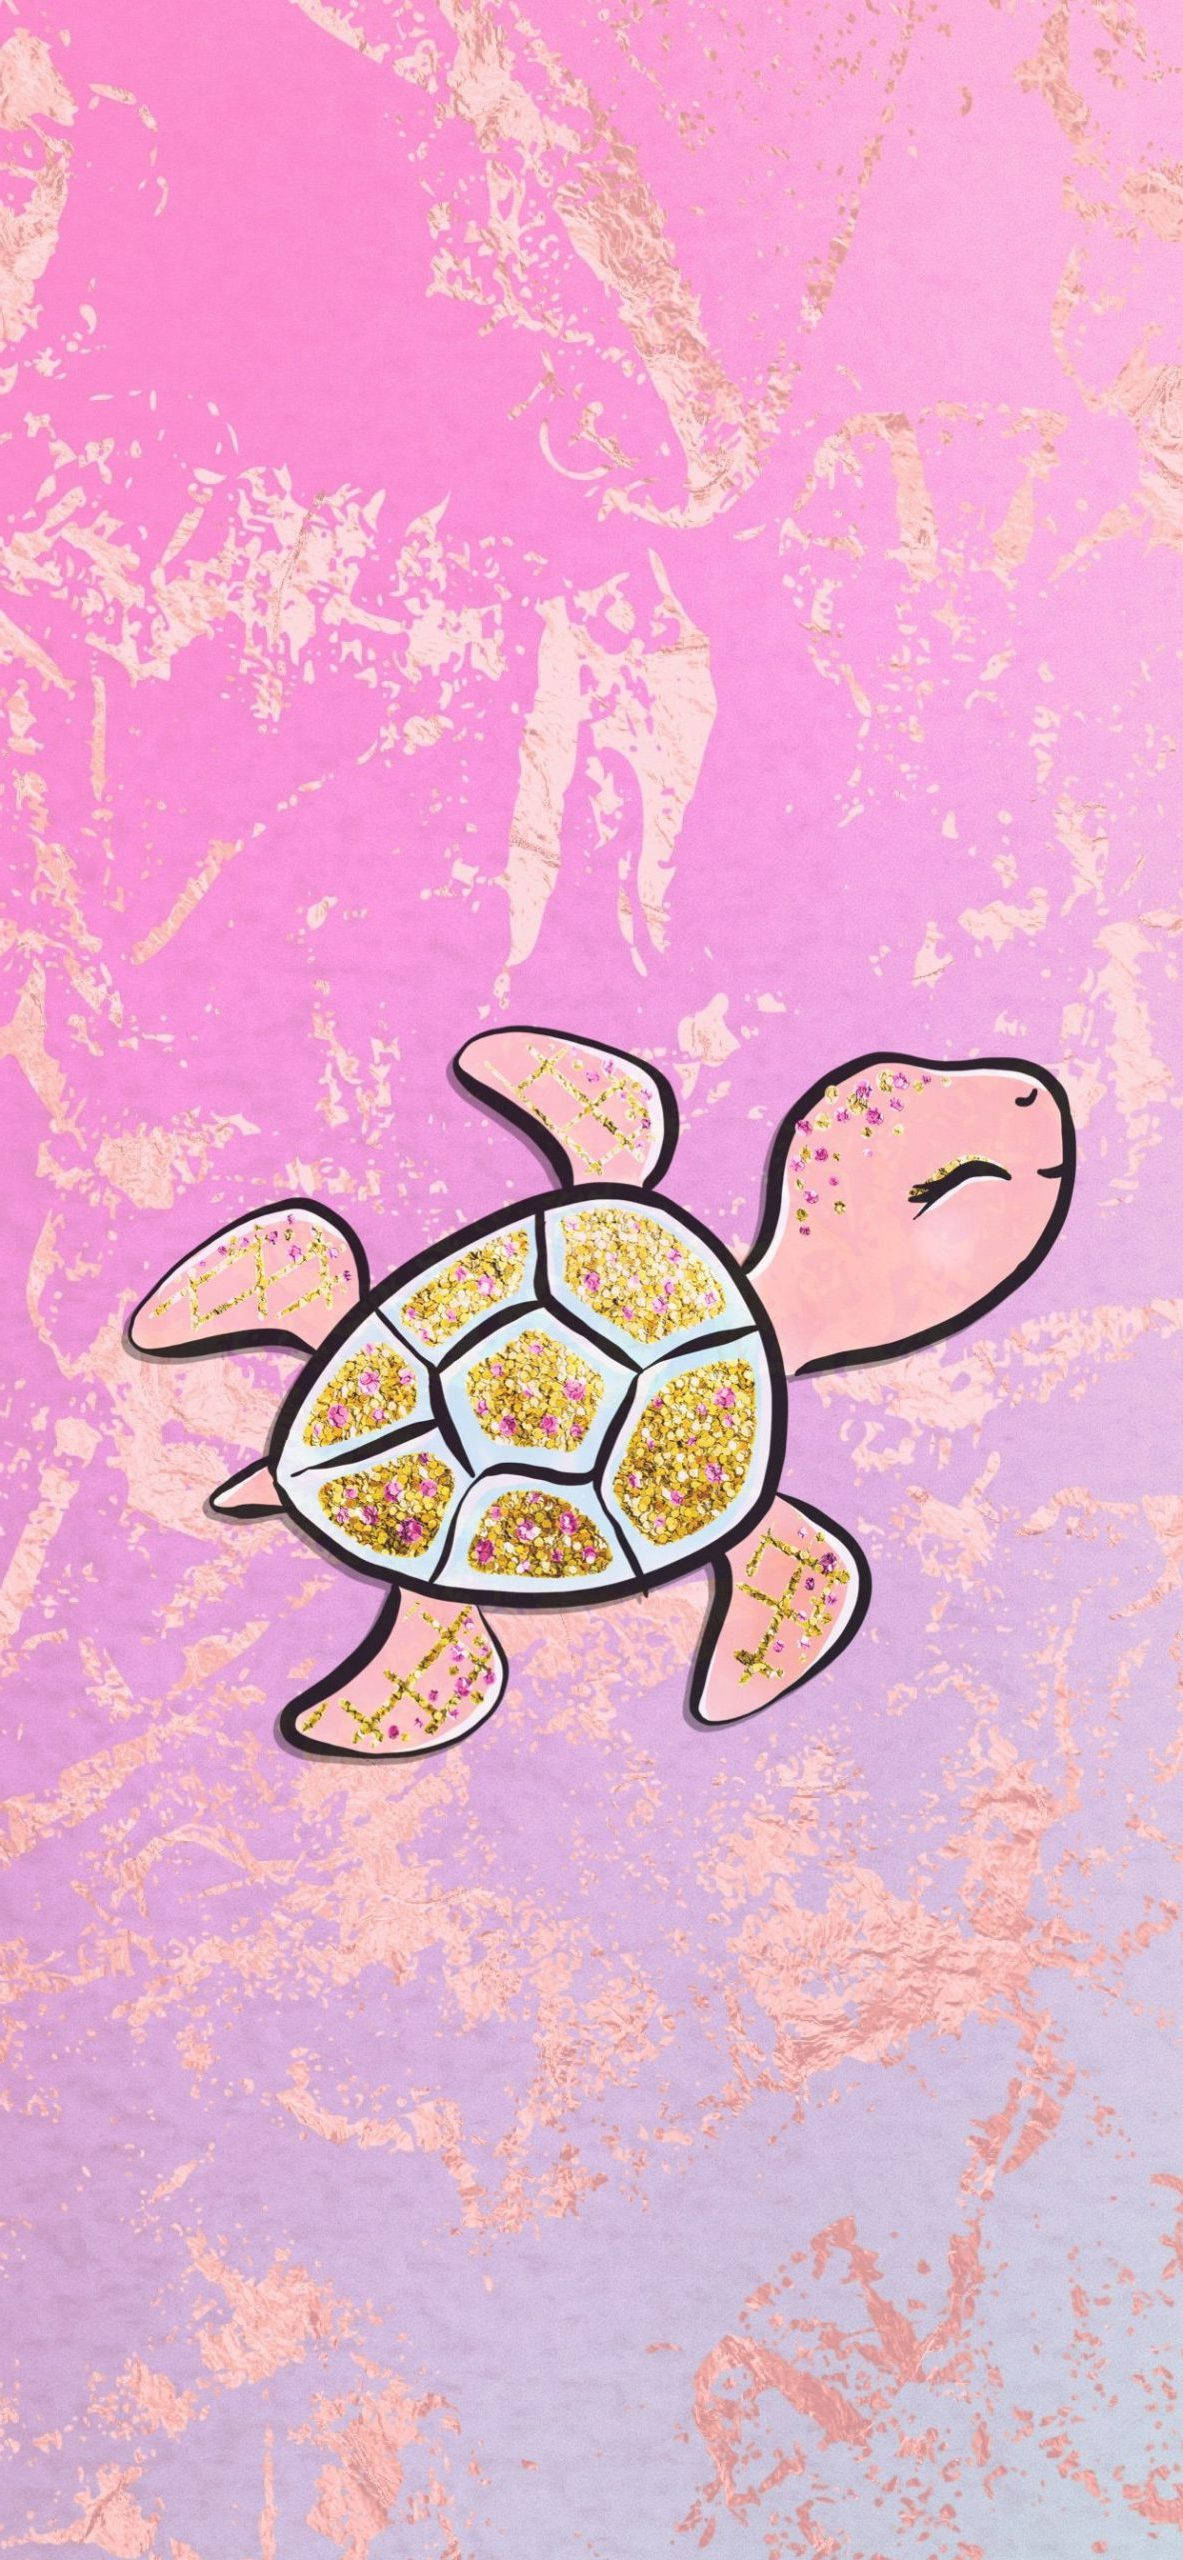 Download Turtle Artwork Wallpaper